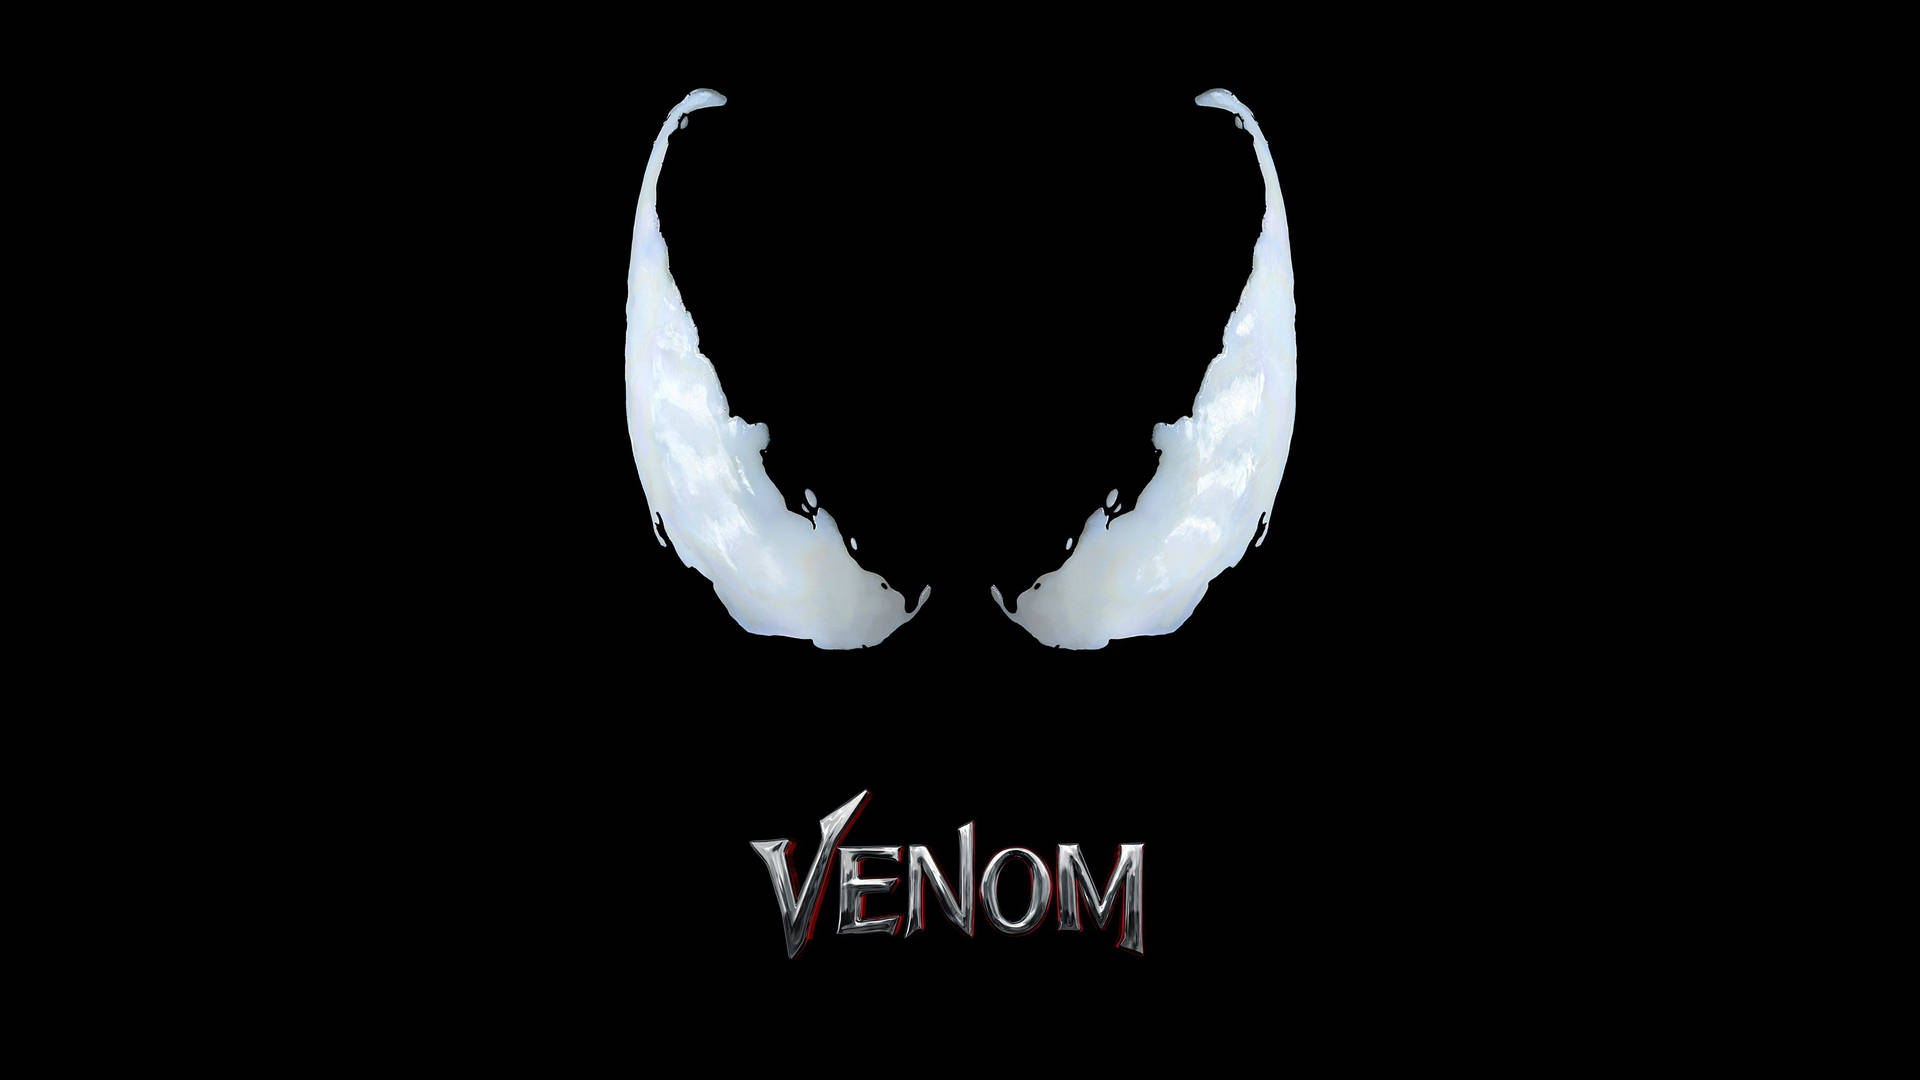 Venom Movie Stylised Title Lettering Background